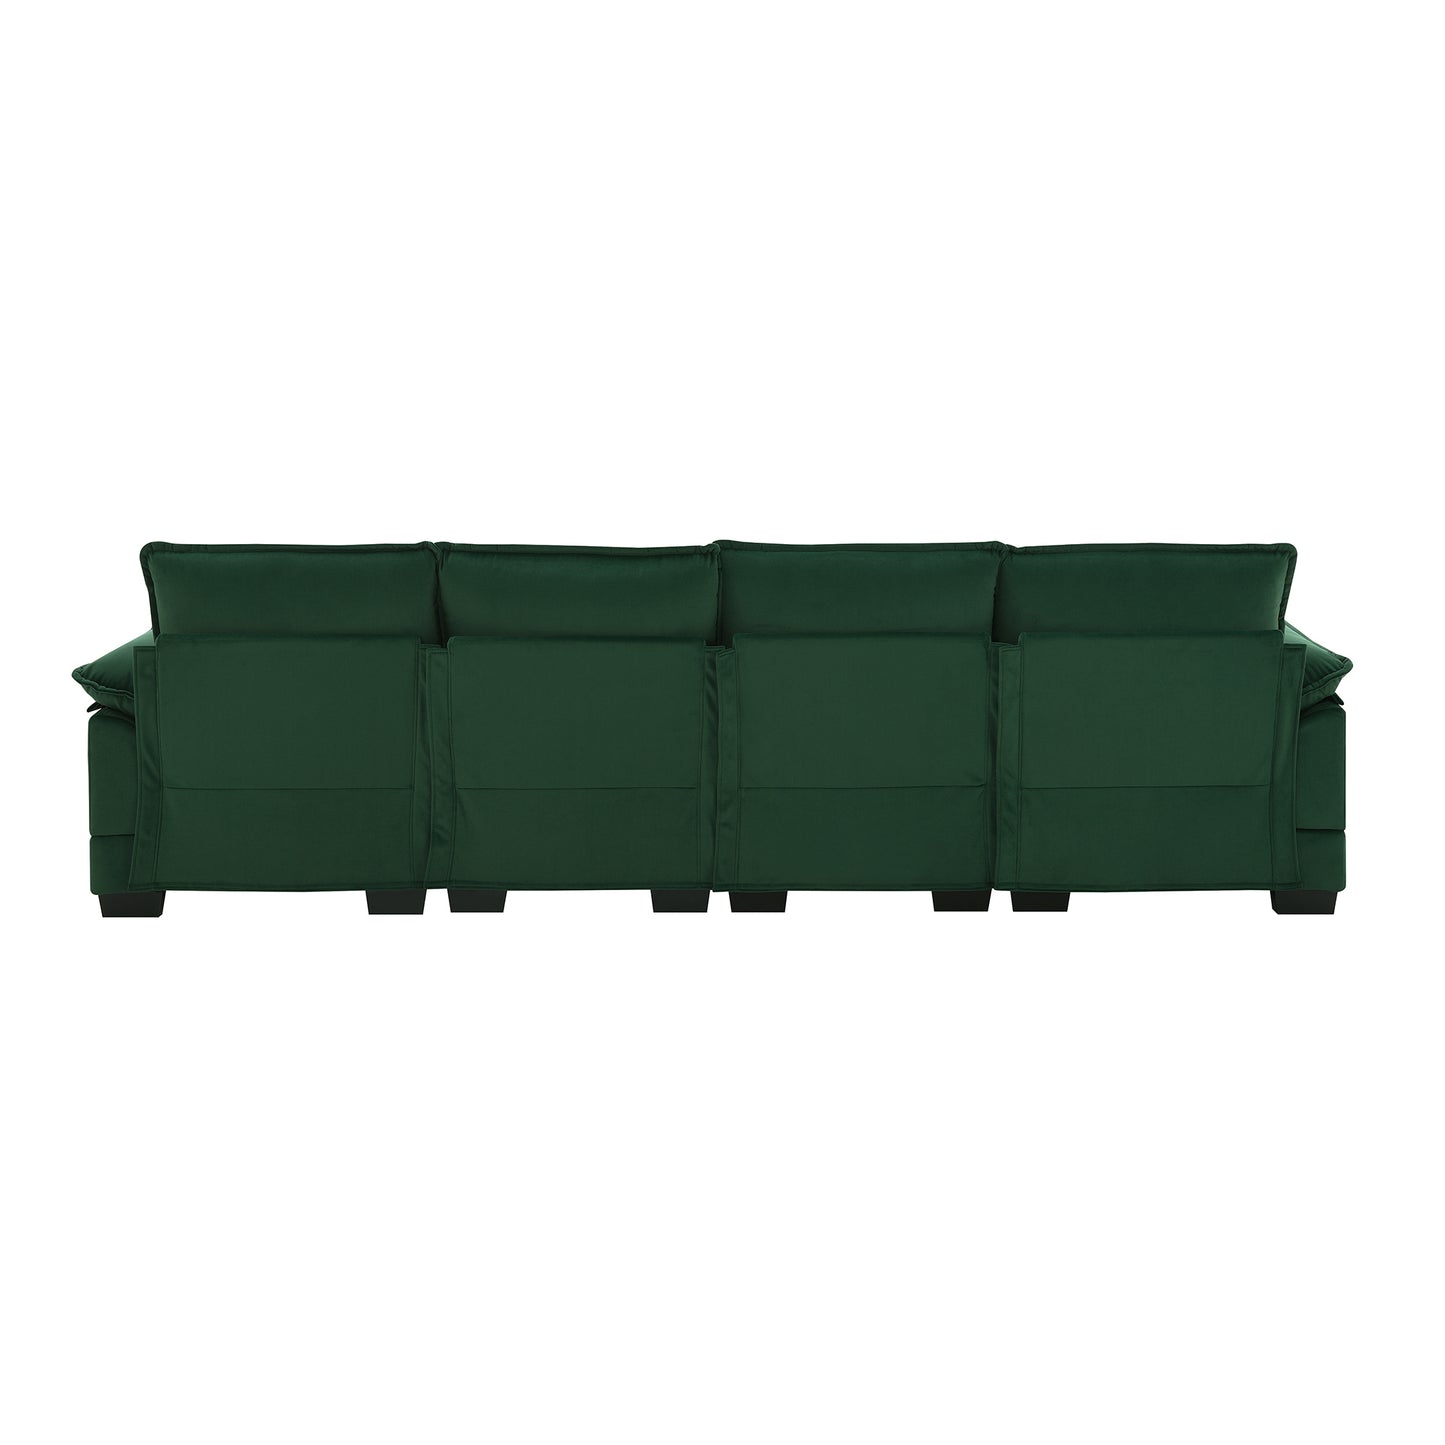 110*55" Modern U-shaped Sectional Sofa with Waist Pillows